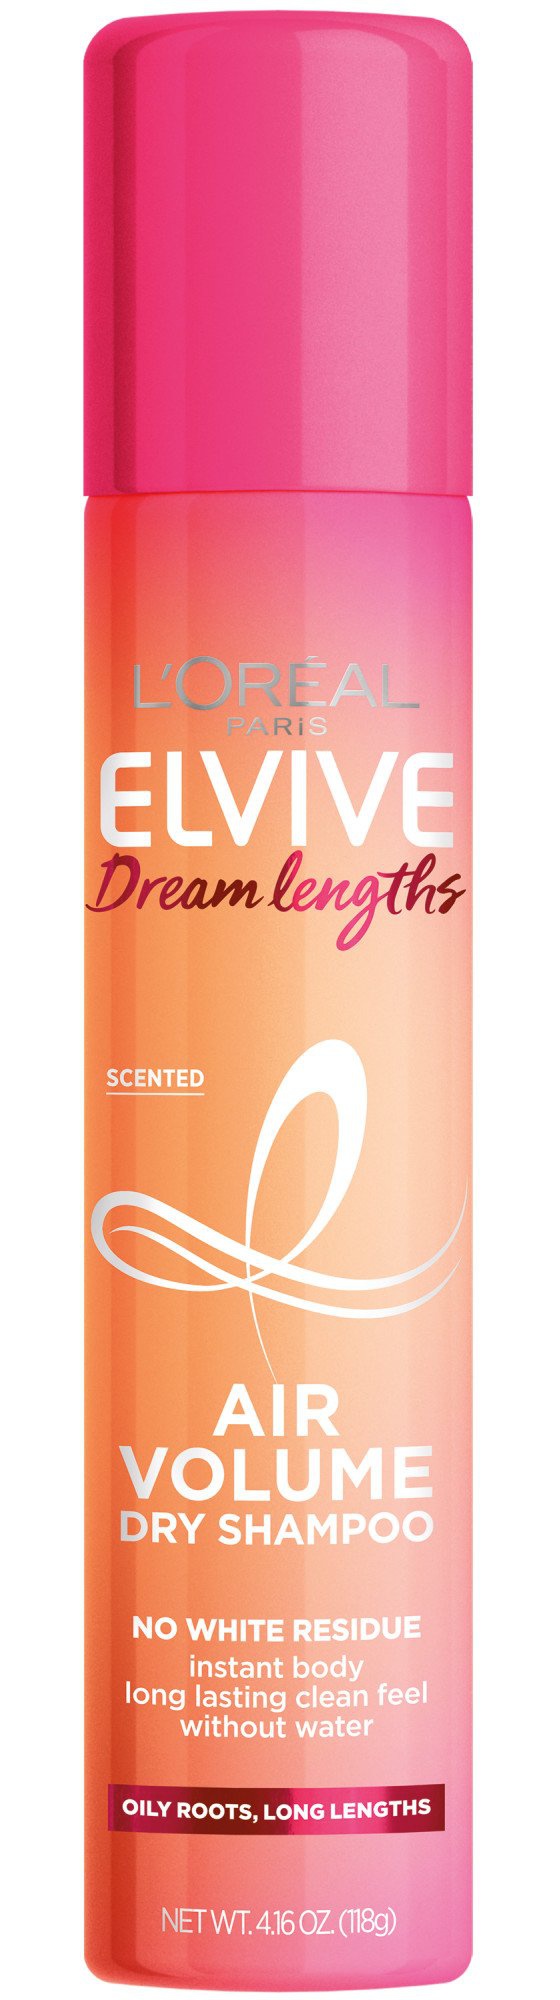 L'Oreal Elvive Dream Lengths Air Volume Dry Shampoo